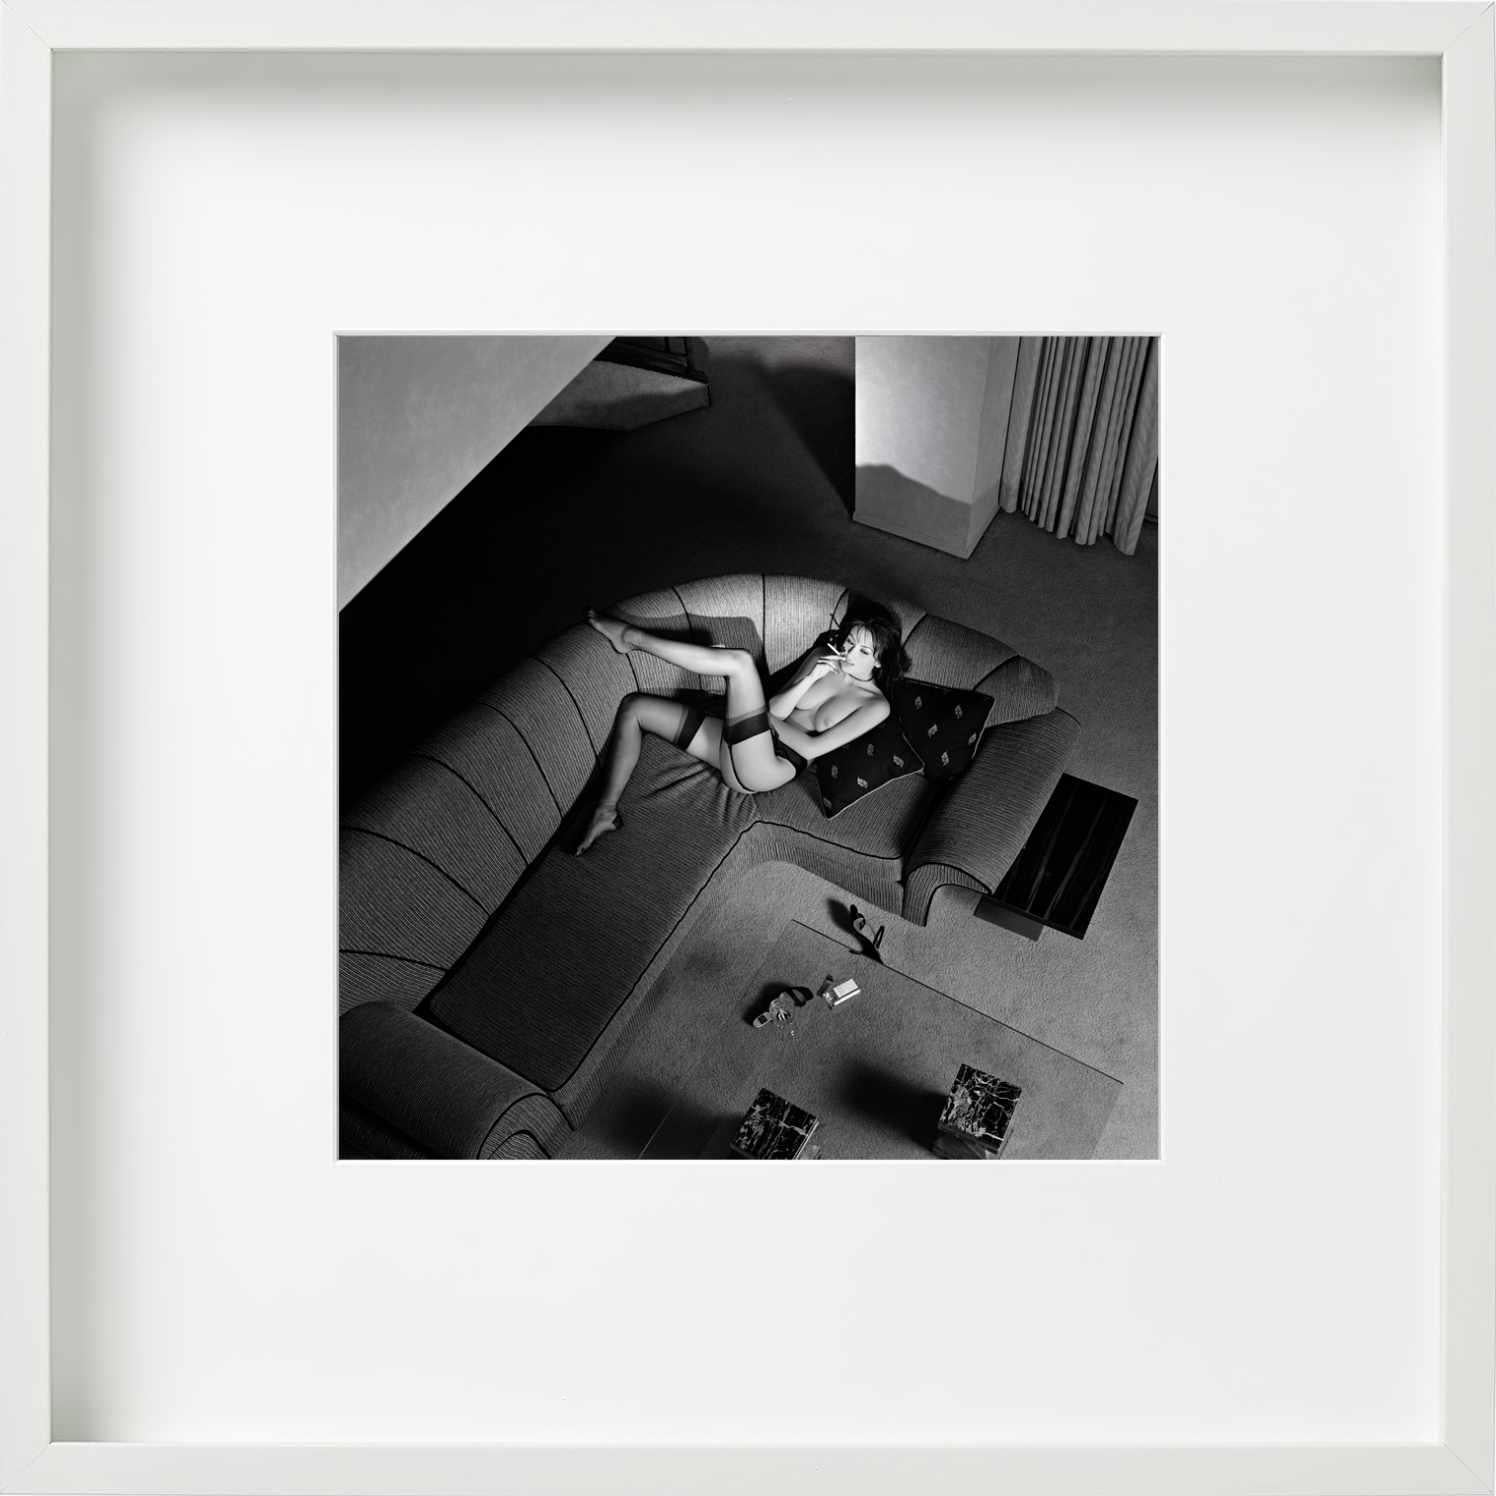 Petra Smoking a Cigarette - Nude Woman on a Sofa, Fine Art Photography, 2012 For Sale 1